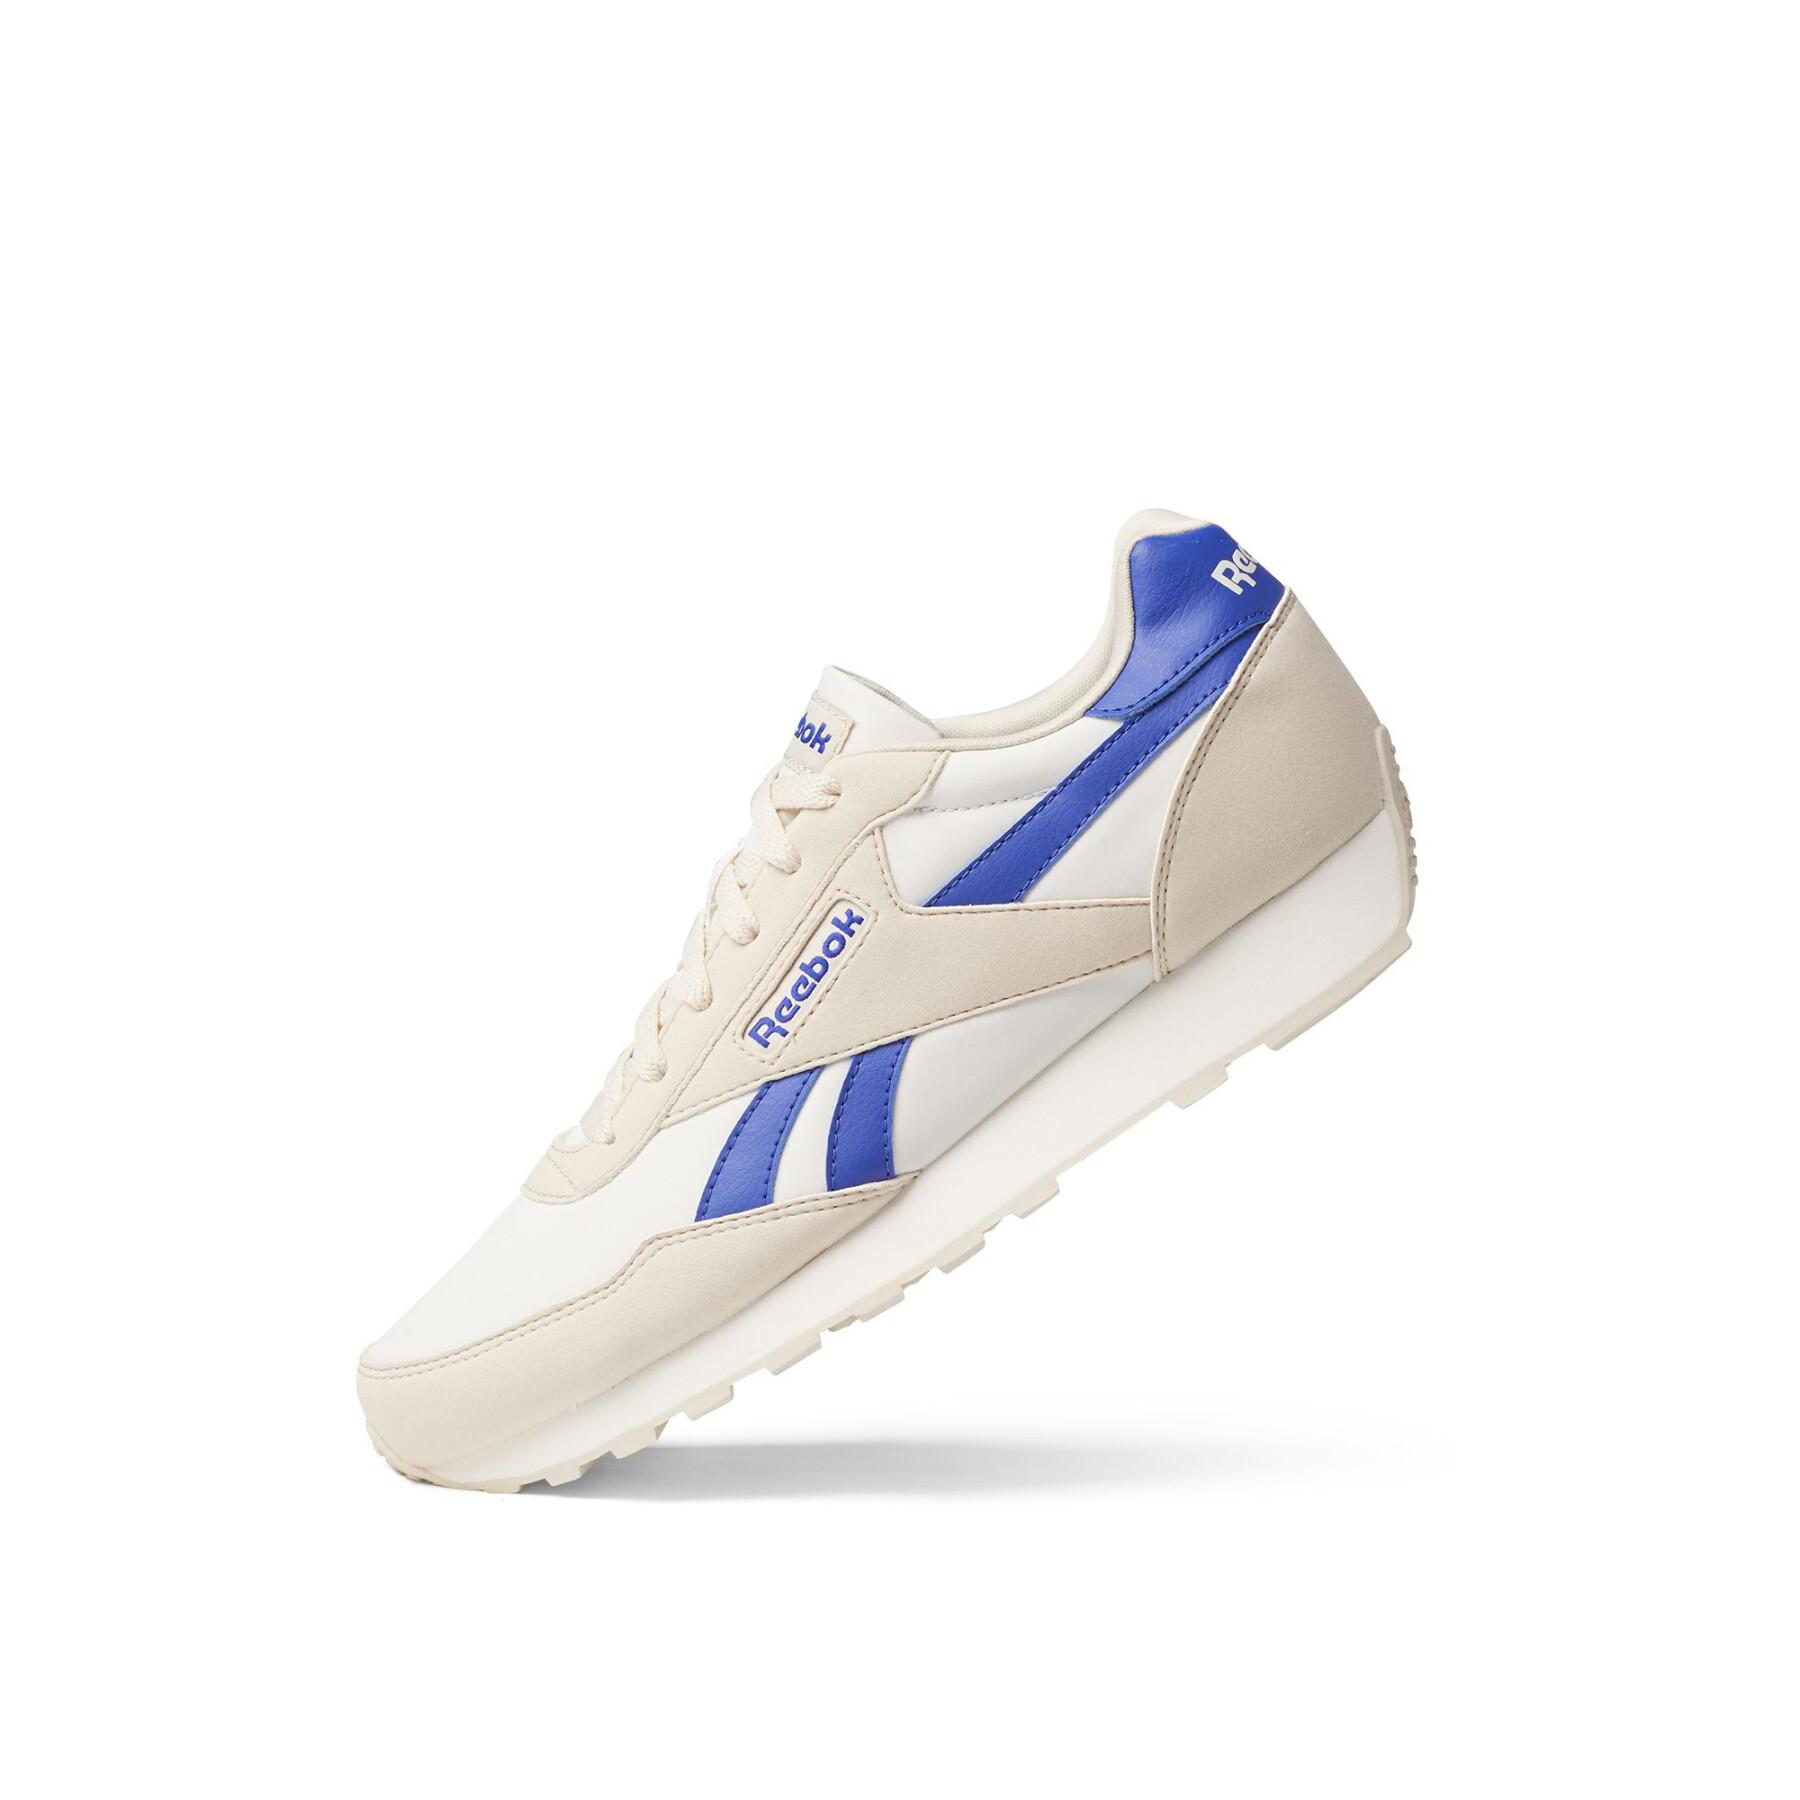 Reebok CL Leather MU Classic White Blue Hills Men Running Shoes Sneakers DV7031